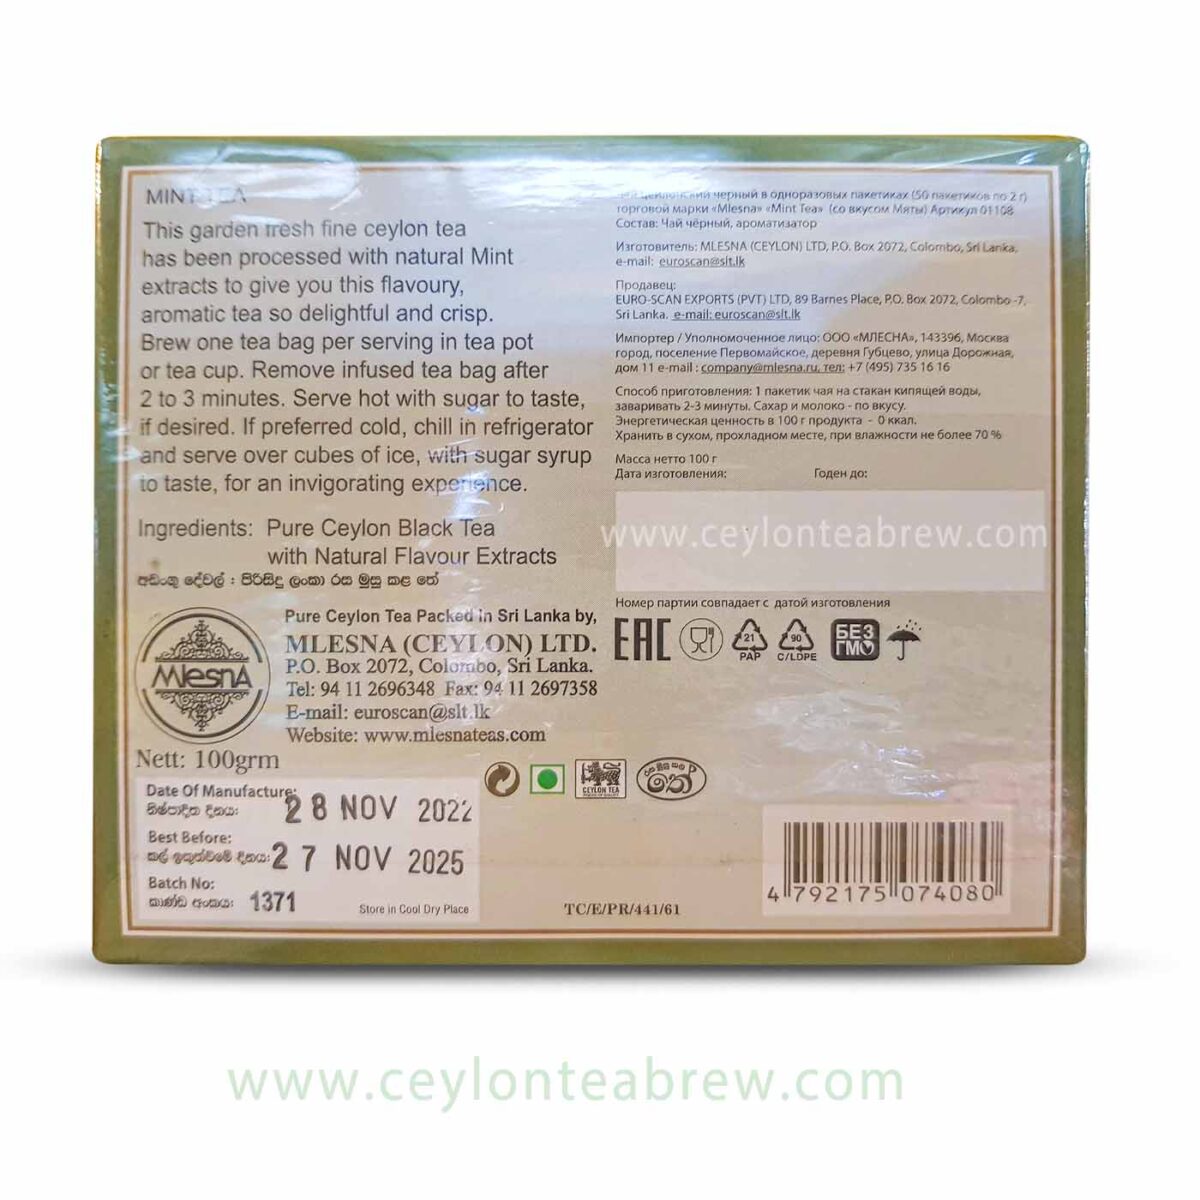 Mlesna Ceylon Ceylon black tea bags with natural Mint extracts